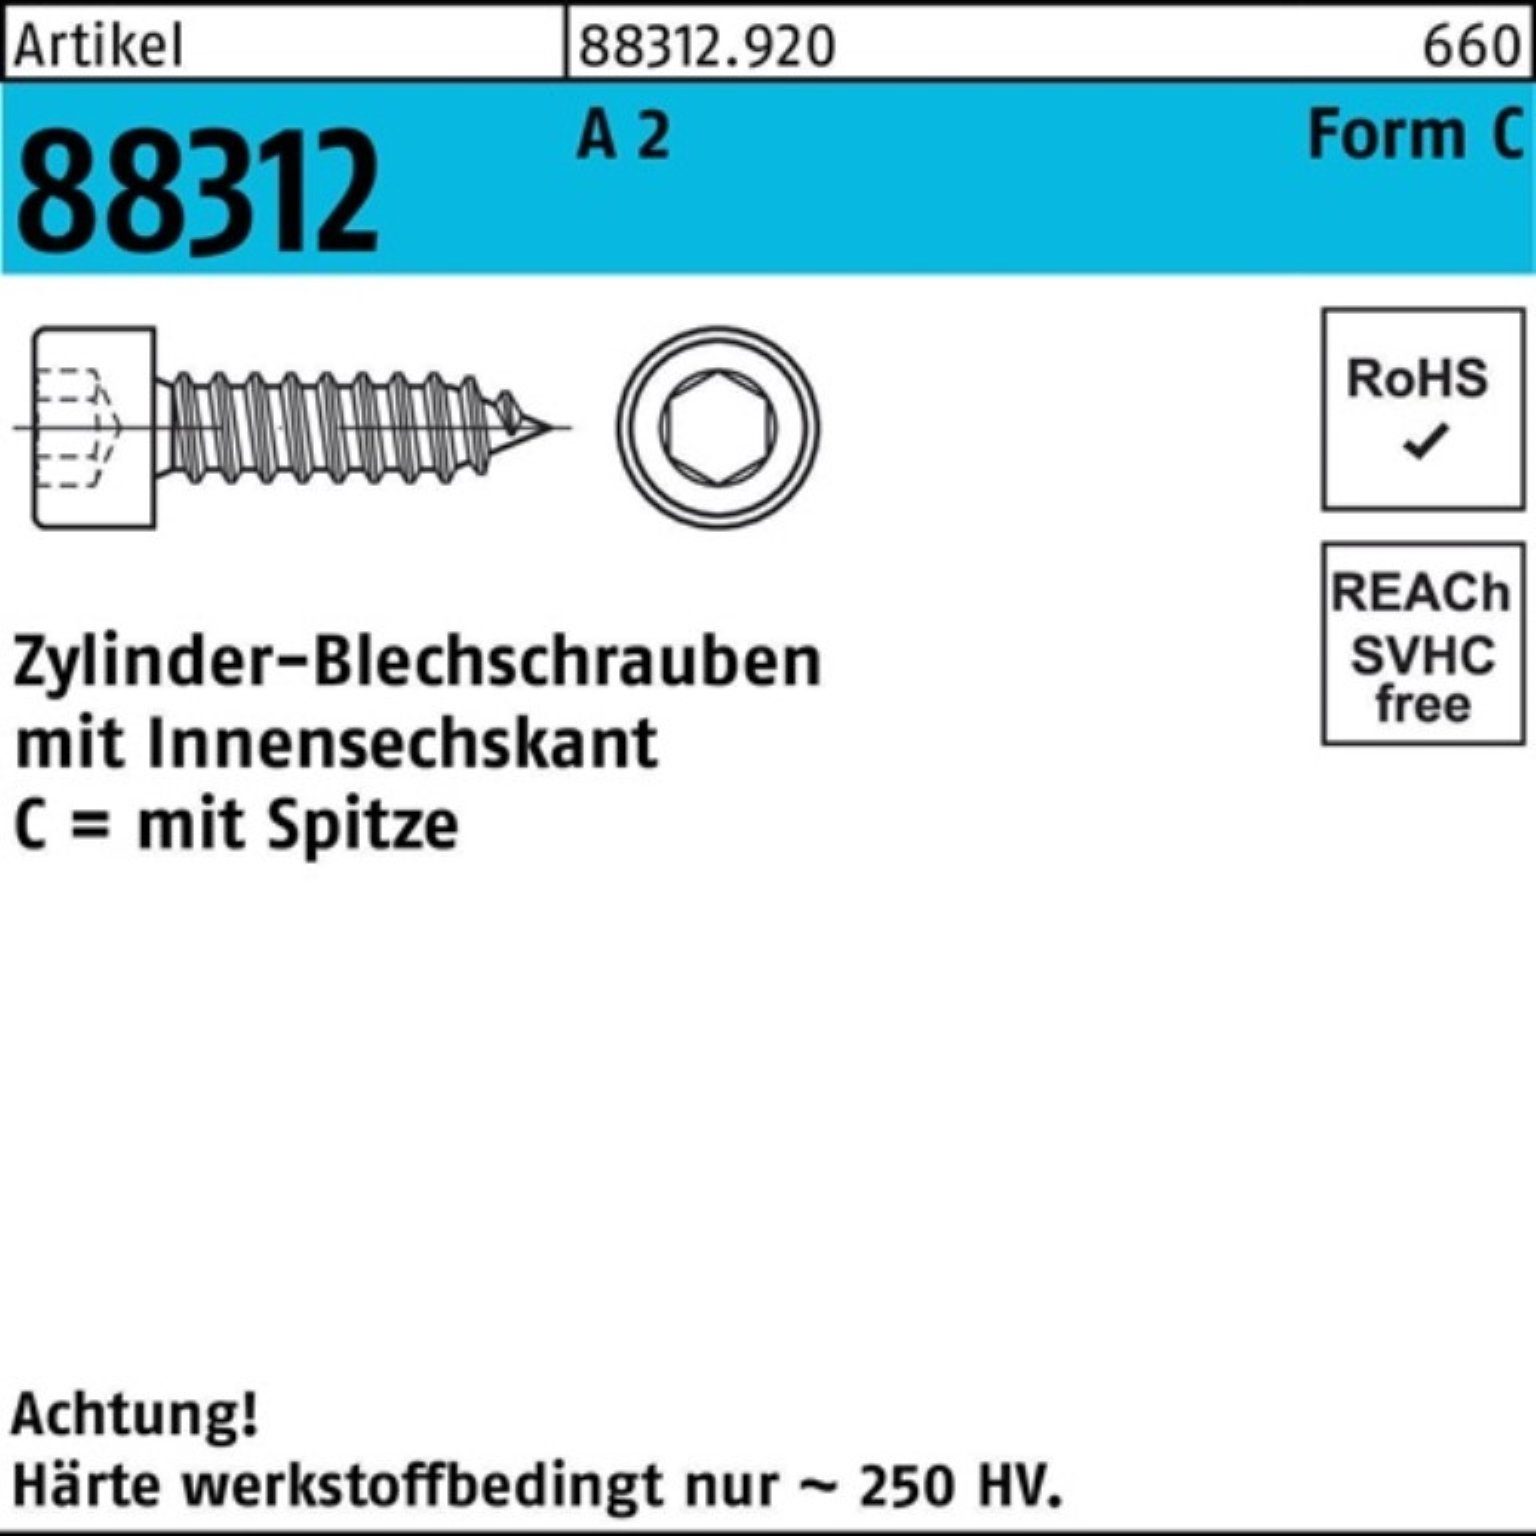 Zylinderblechschraube R 88312 Spitze/Innen-6kt C Pack 1000er A Blechschraube 4,8x Reyher 19